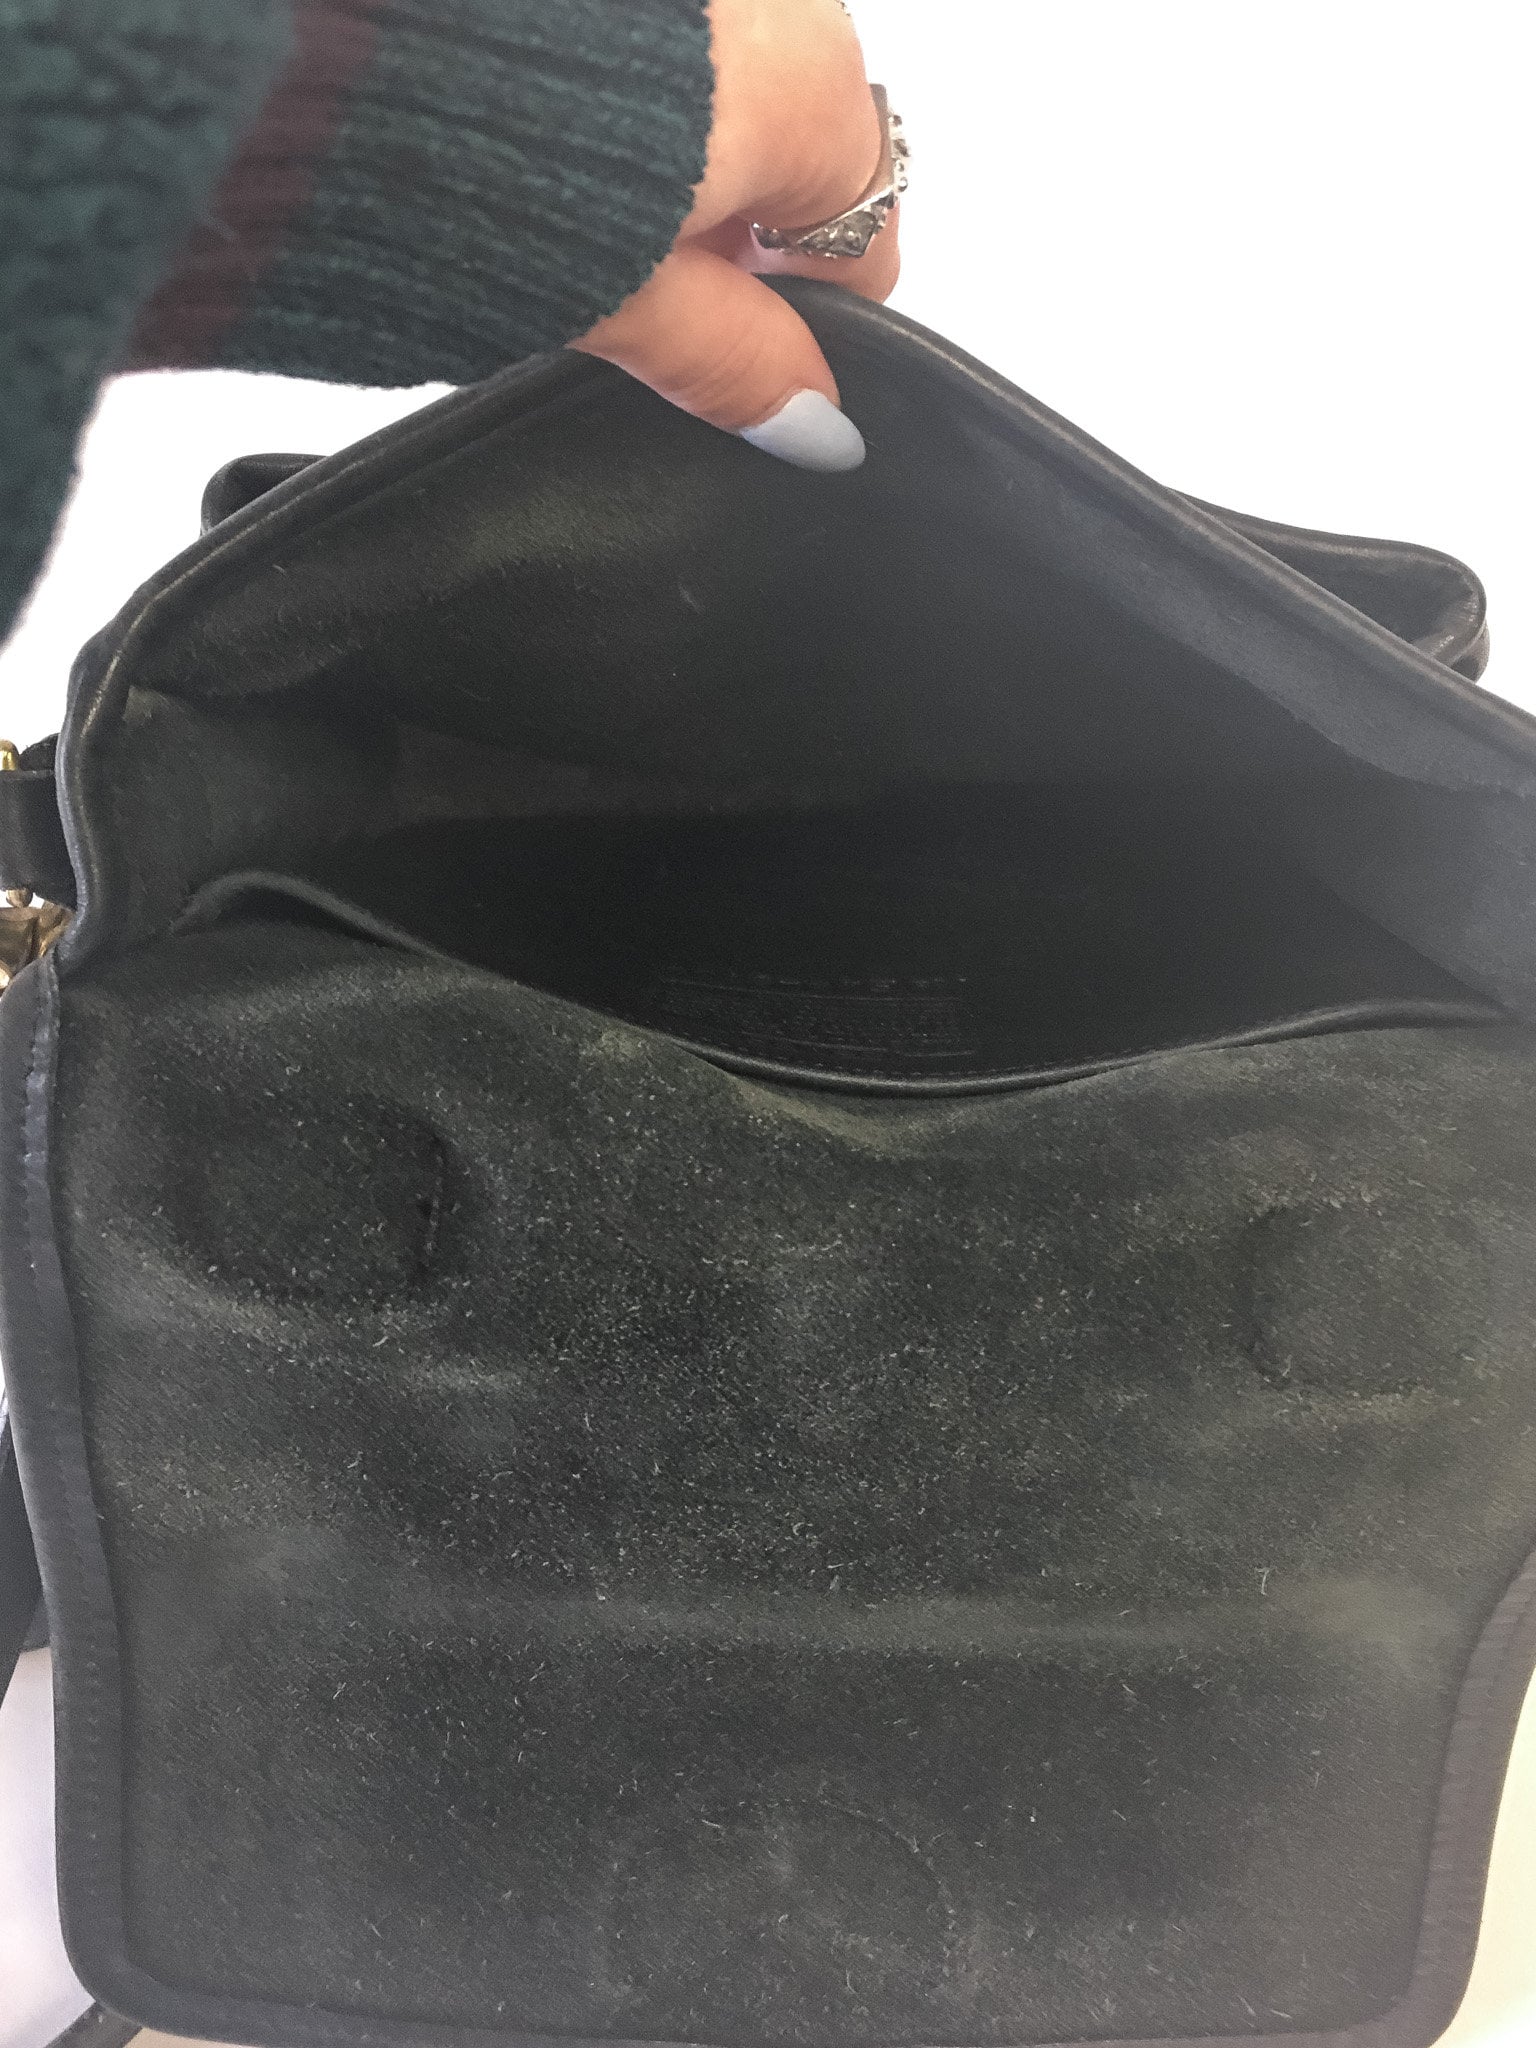 Vintage 90s COACH Dark Gray Station Crossbody Bag with Top Handle, Style #5130, 90s Coach Handbag